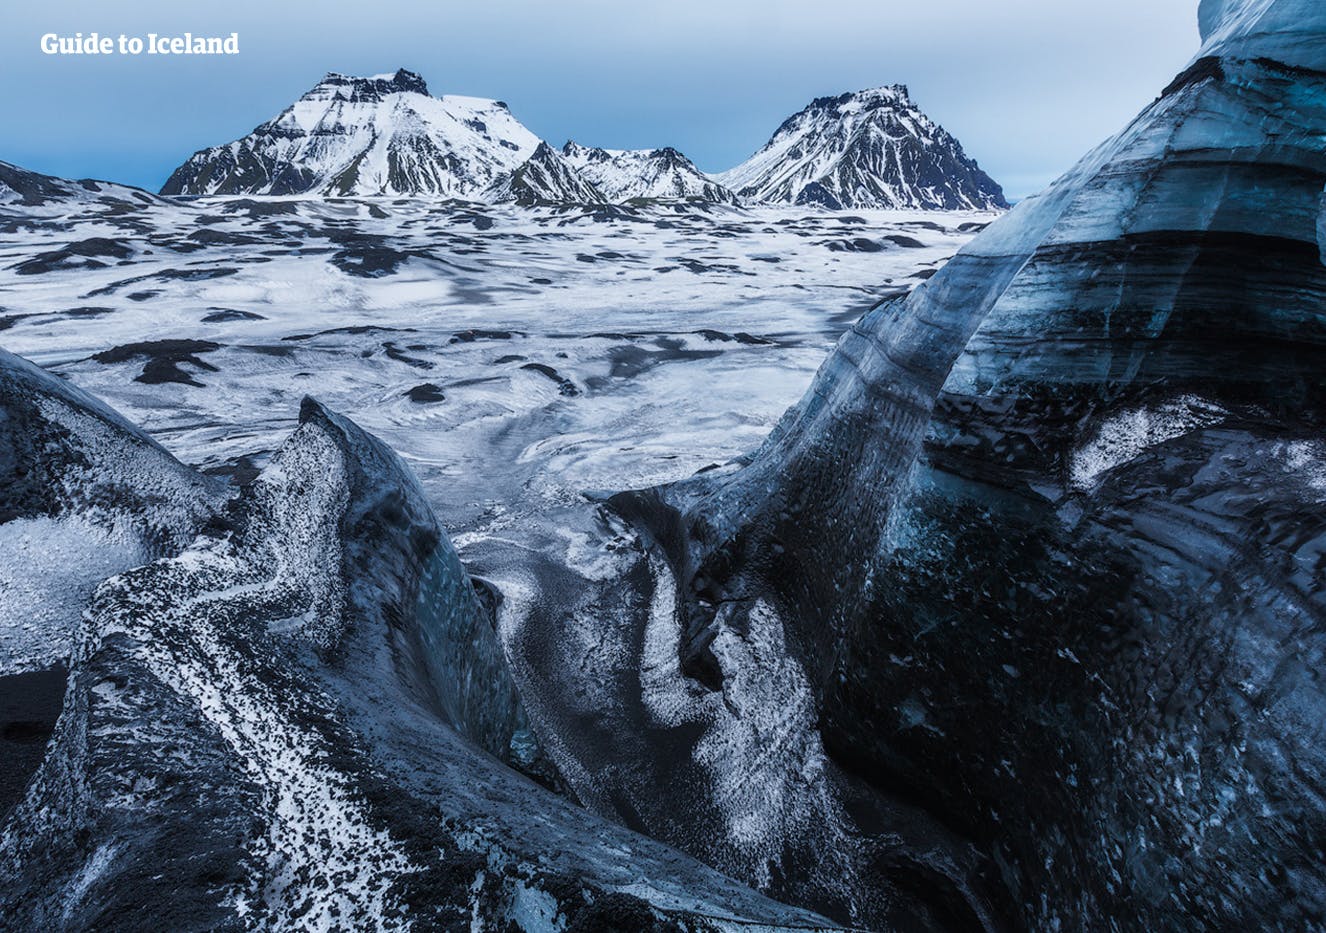 The icy terrain of Myrdalsjokull glacier during summer.